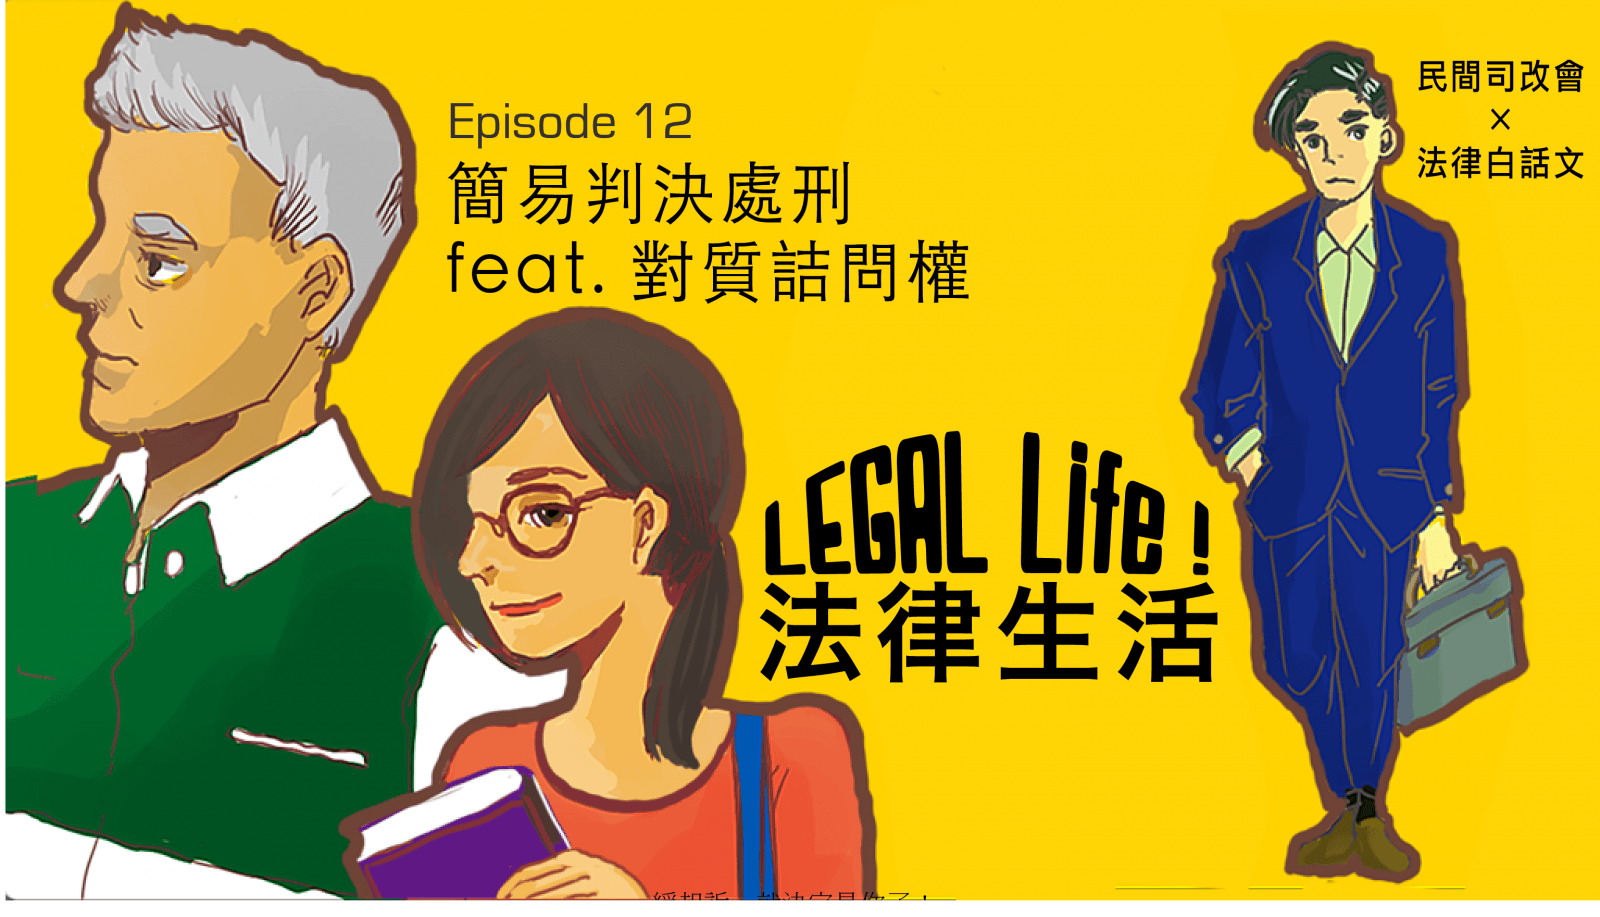 2016/08/legal-life12.png